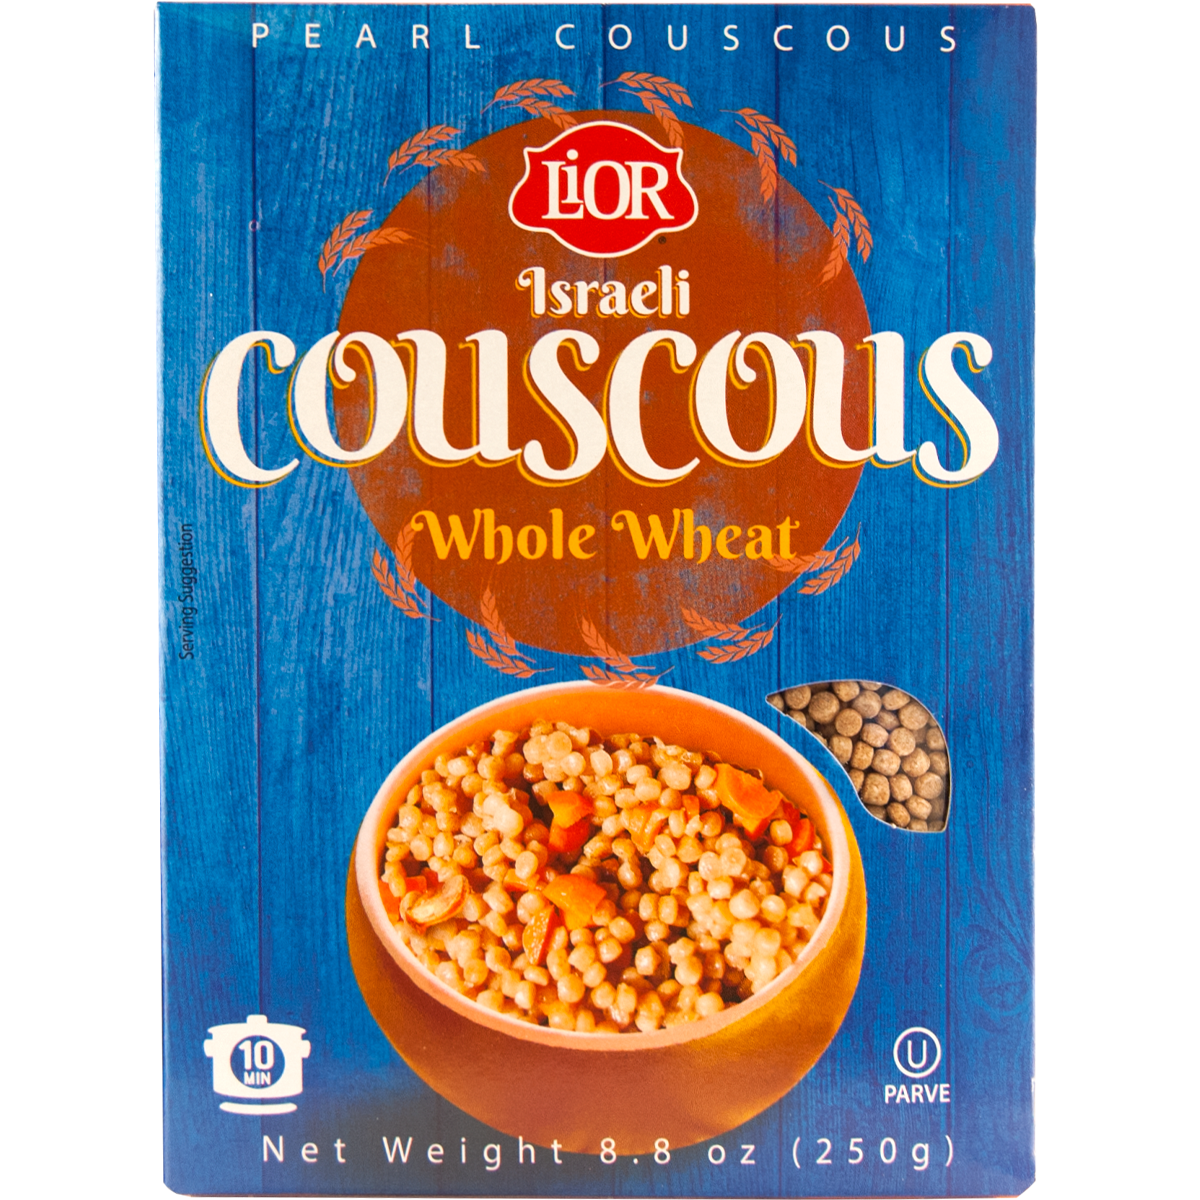 Israeli Couscous | Whole Wheat | Box | 8.8 oz | LiOR